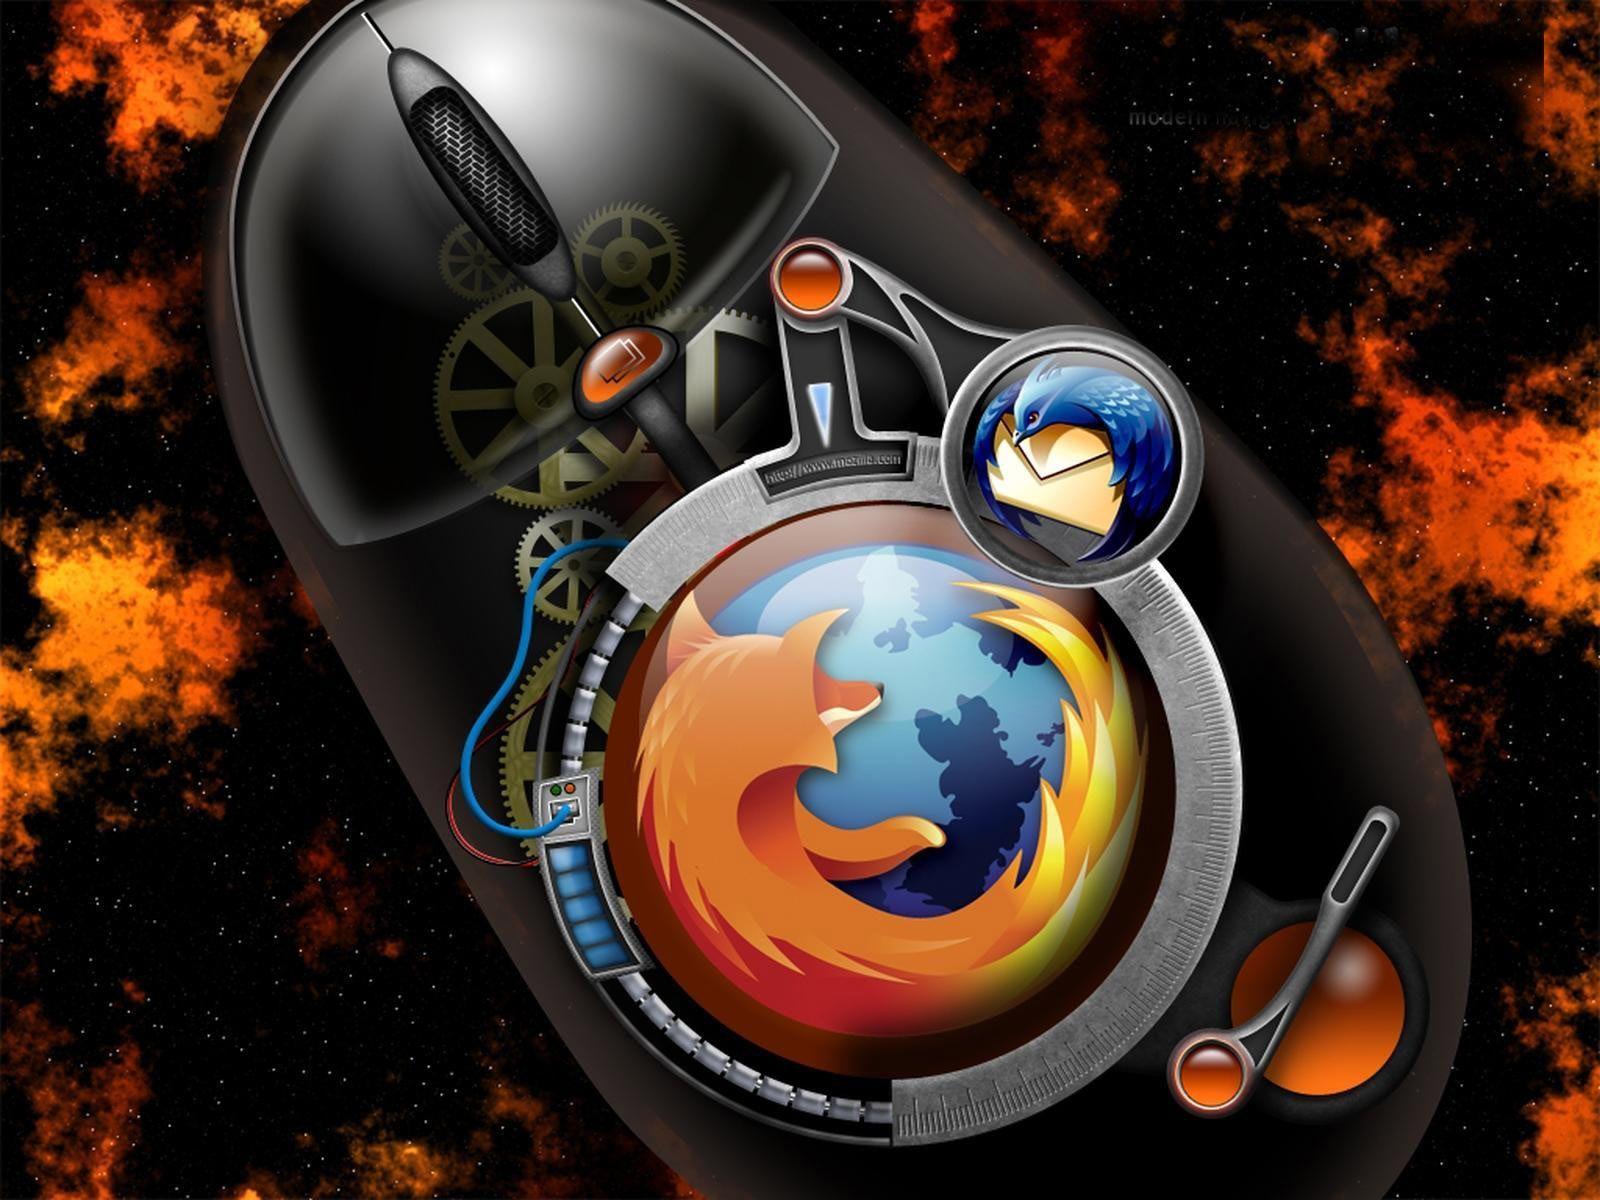 Desktop Wallpaper · Gallery · Computers · Firefox vista theme